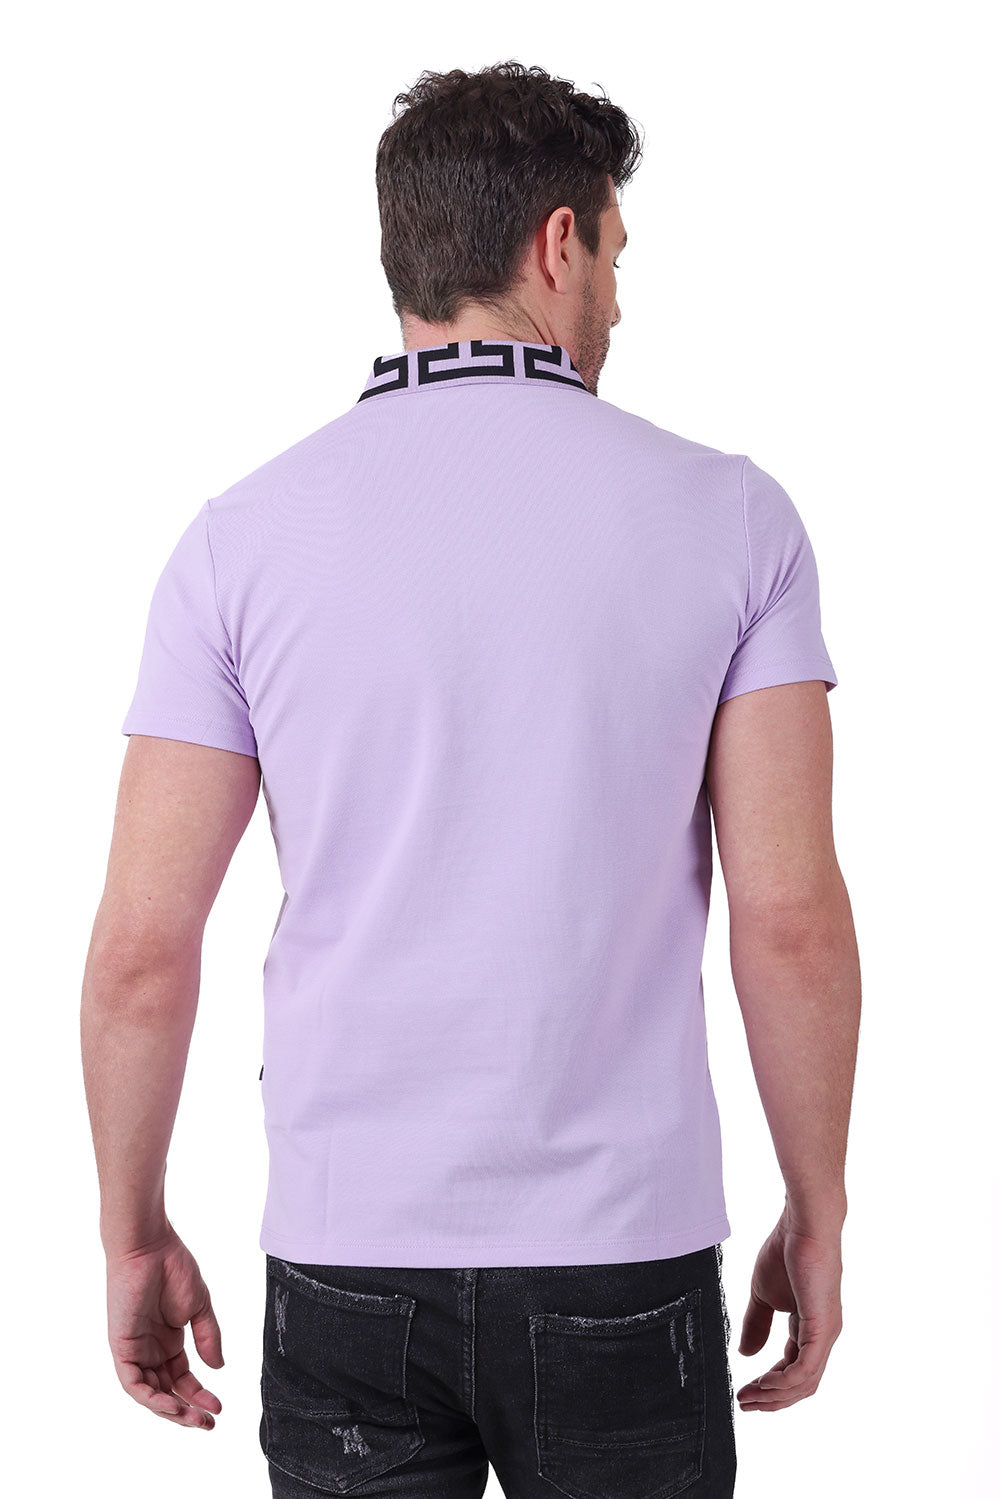 Barabas Men's Greek Key Printed Pattern Designer Polo Shirts PS121 Lavender